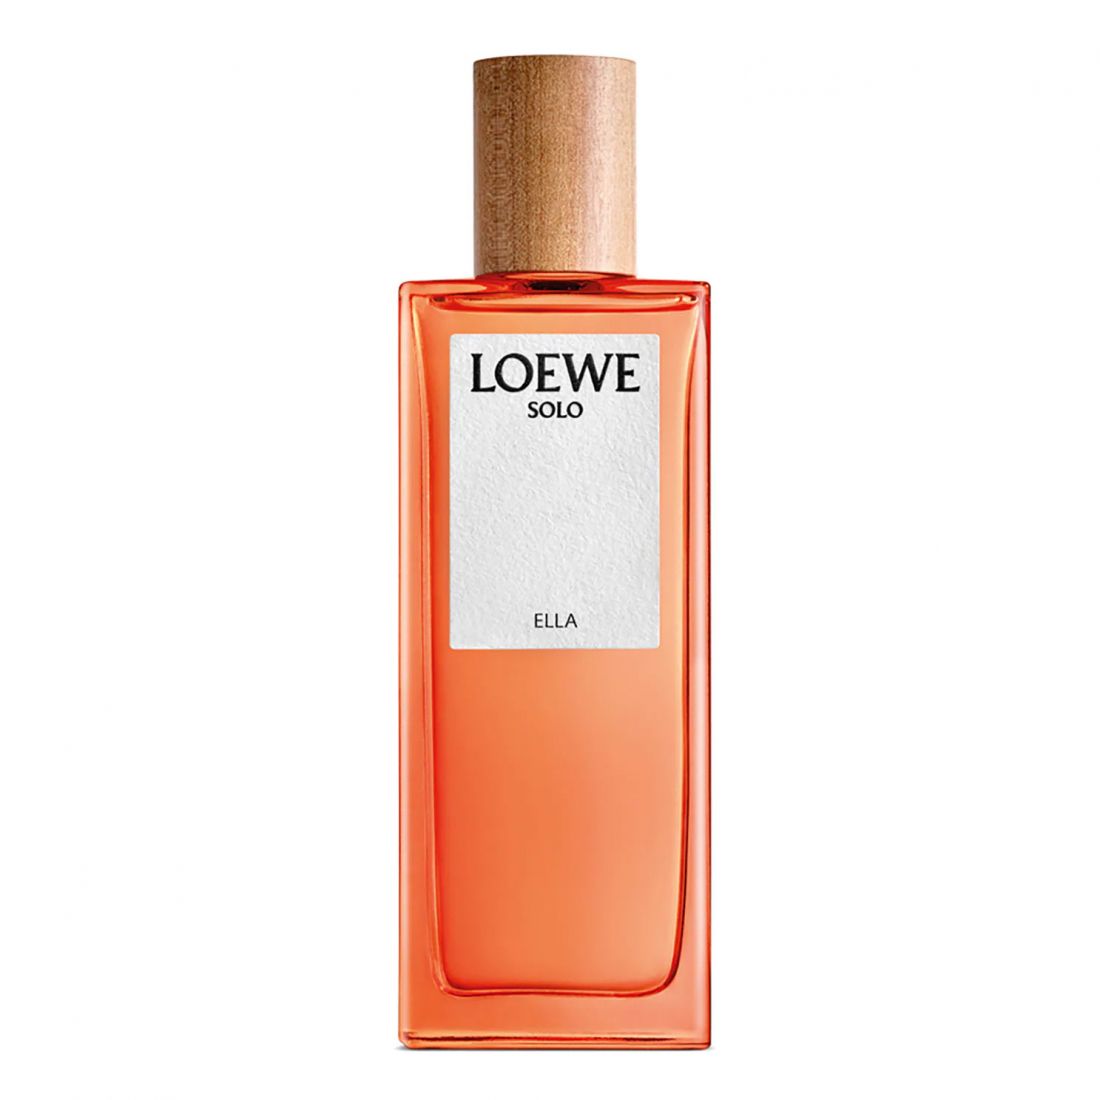 Loewe - Eau de parfum 'Solo Ella' - 50 ml